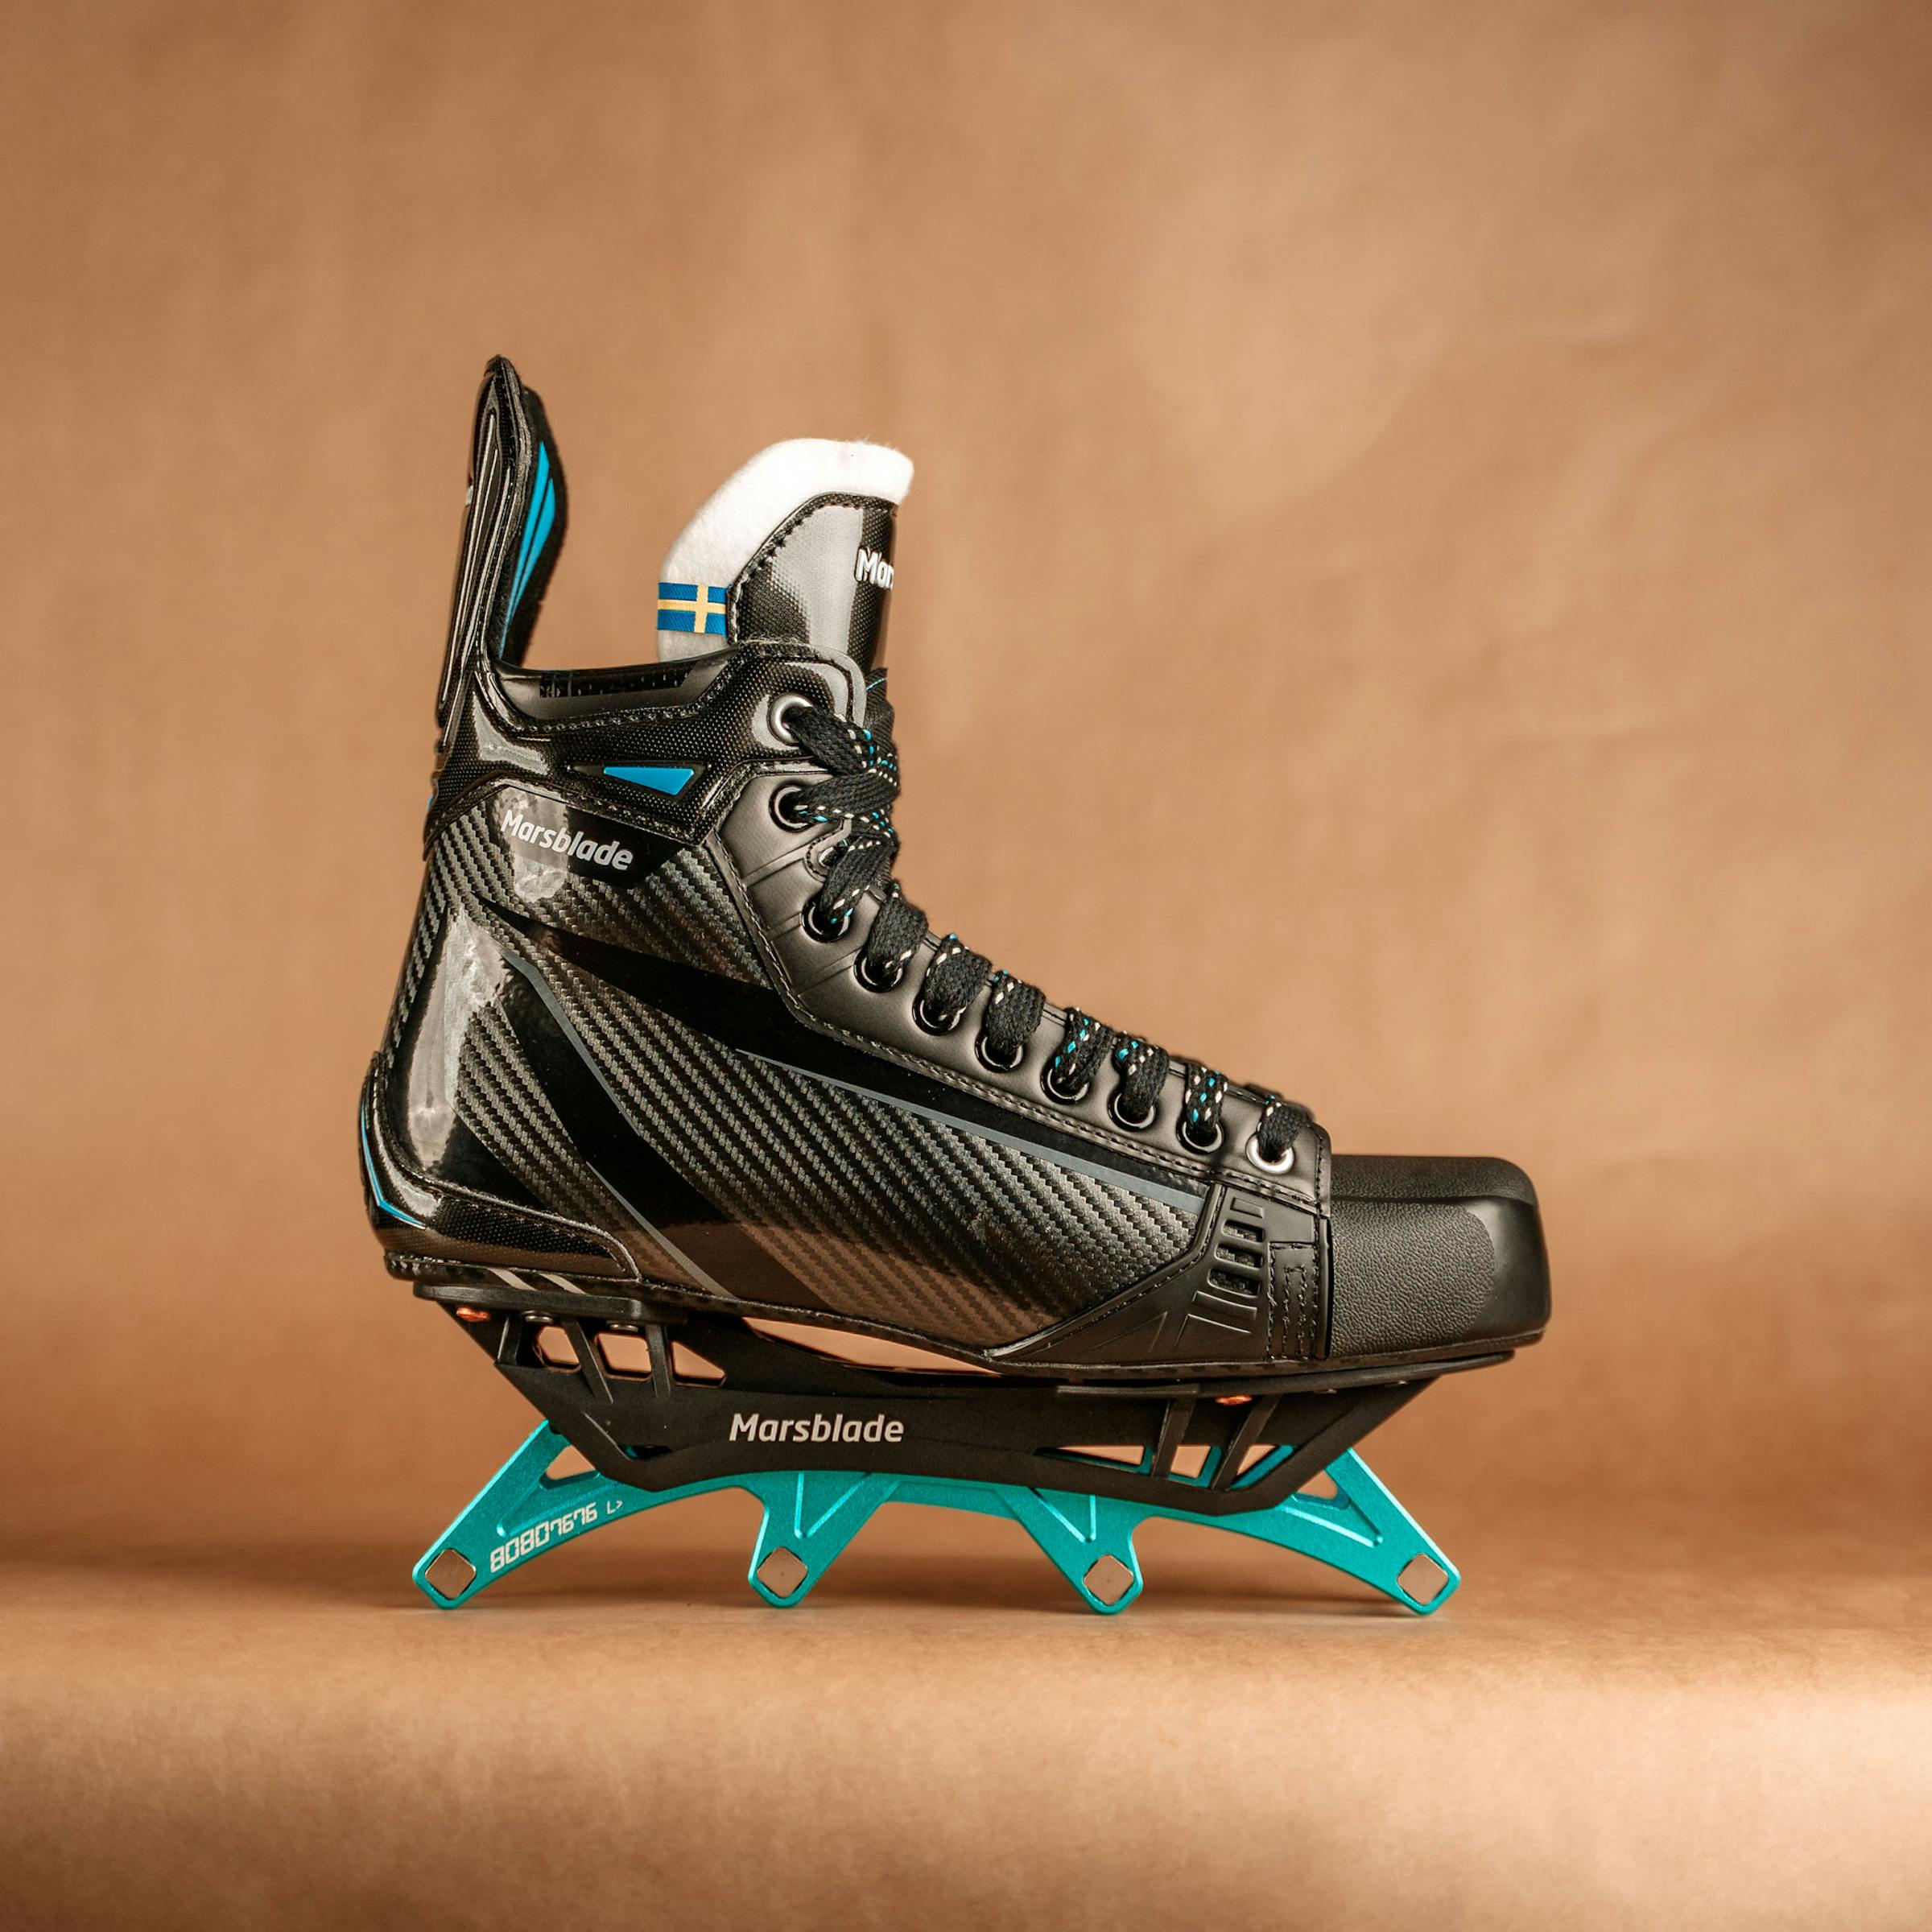 Marsblade Re:skate R1 Elite (no wheels)